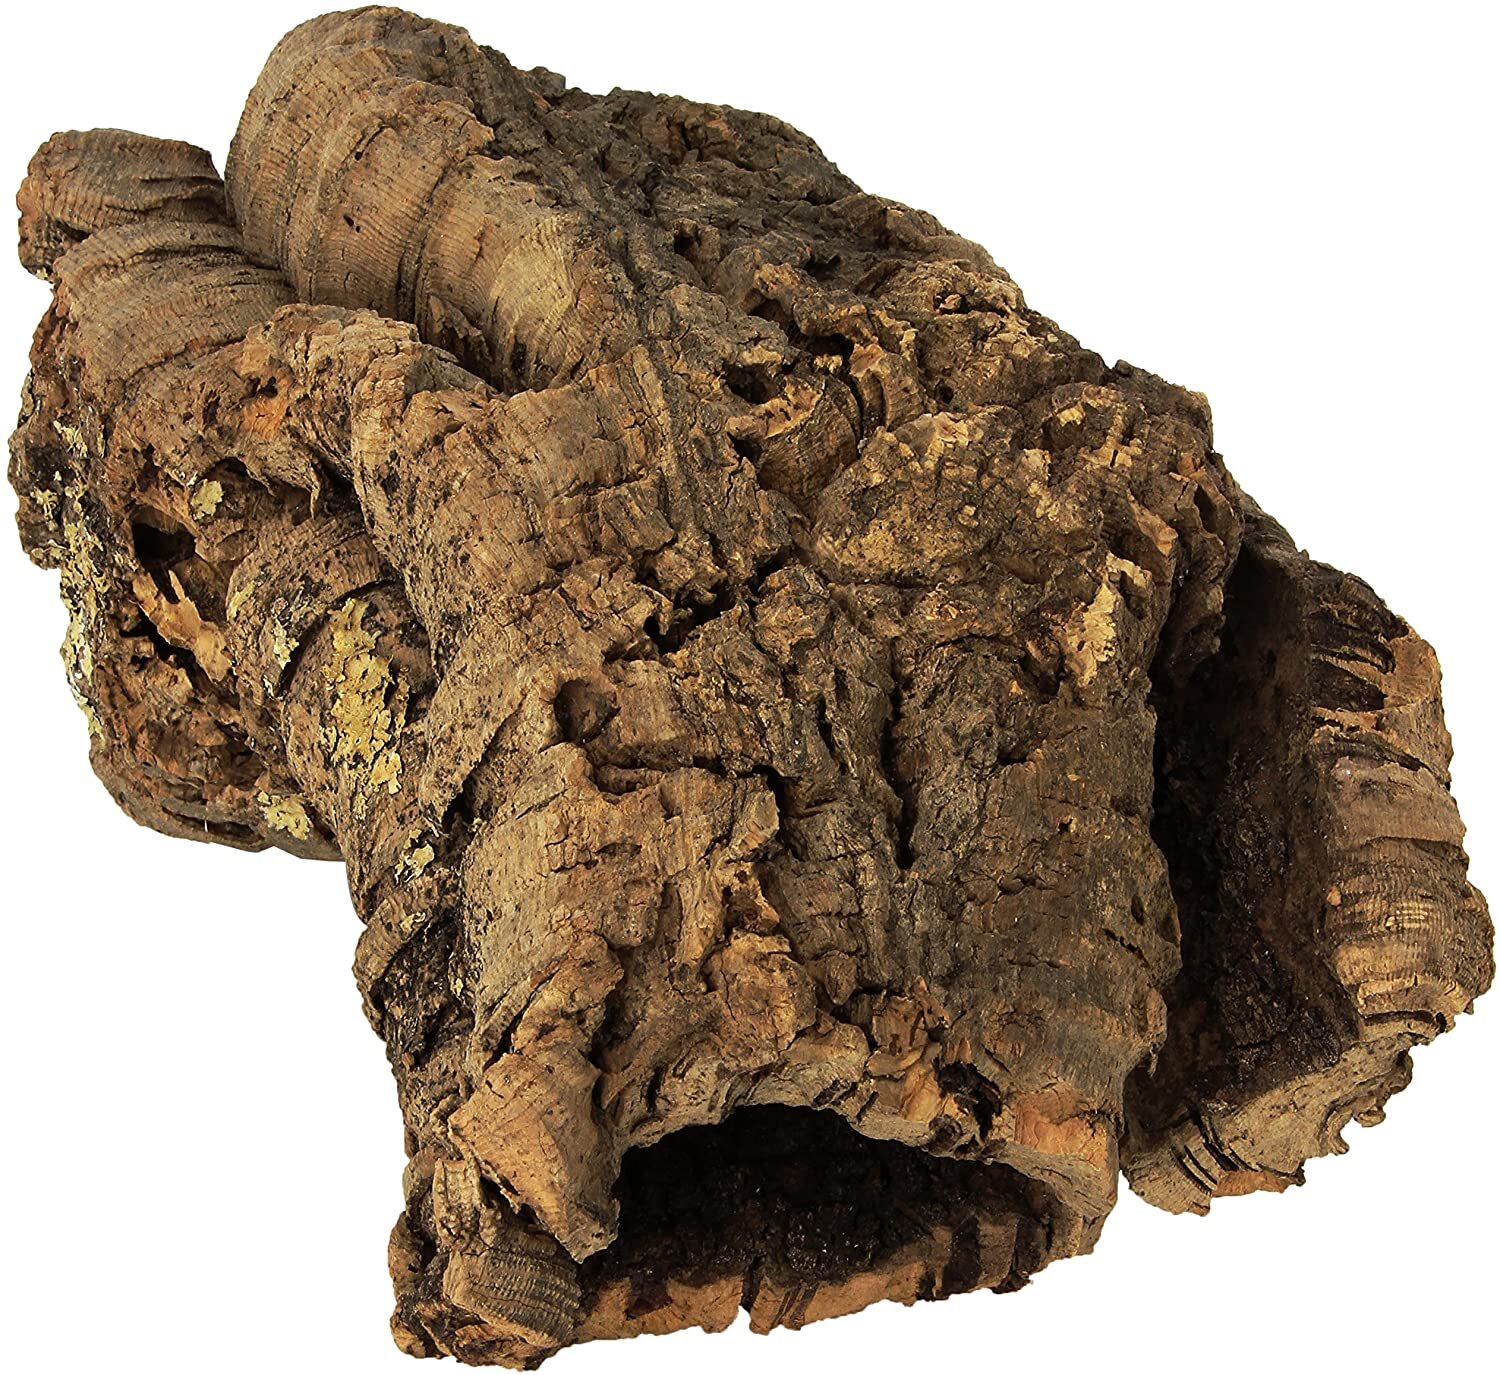 Amazon cork oak bark natural materials fall hygge decor